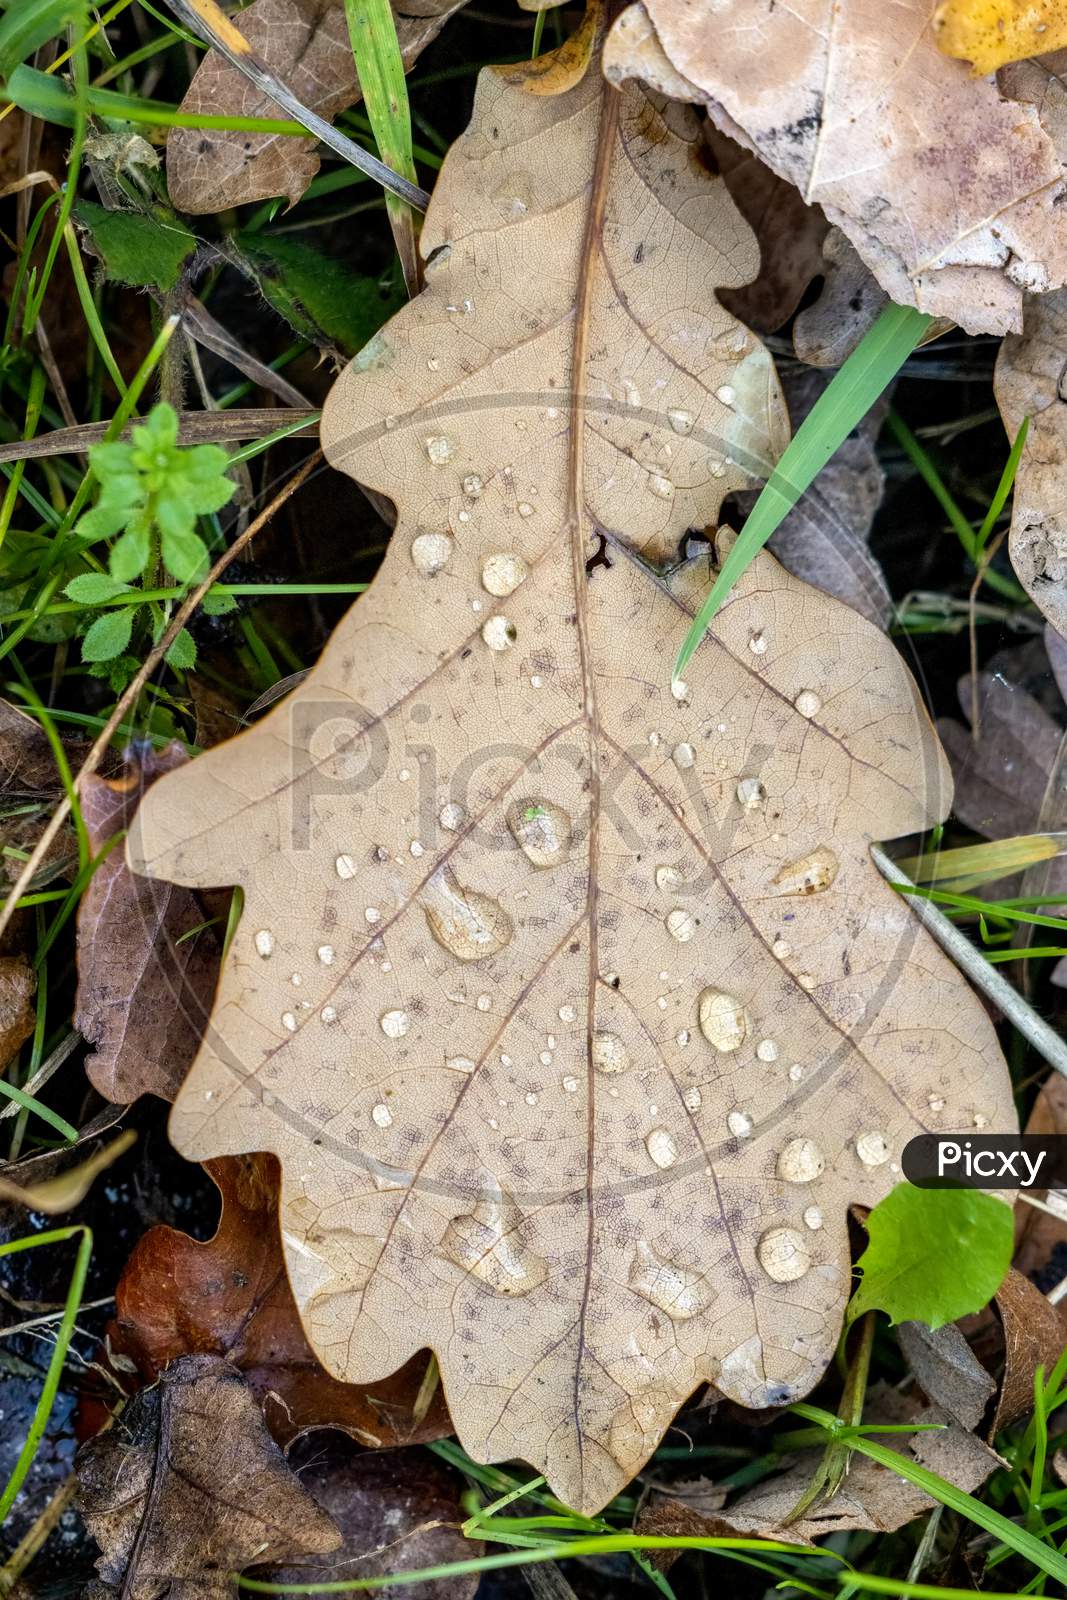 Fallen Oak Leaves On The Ground In Autumn